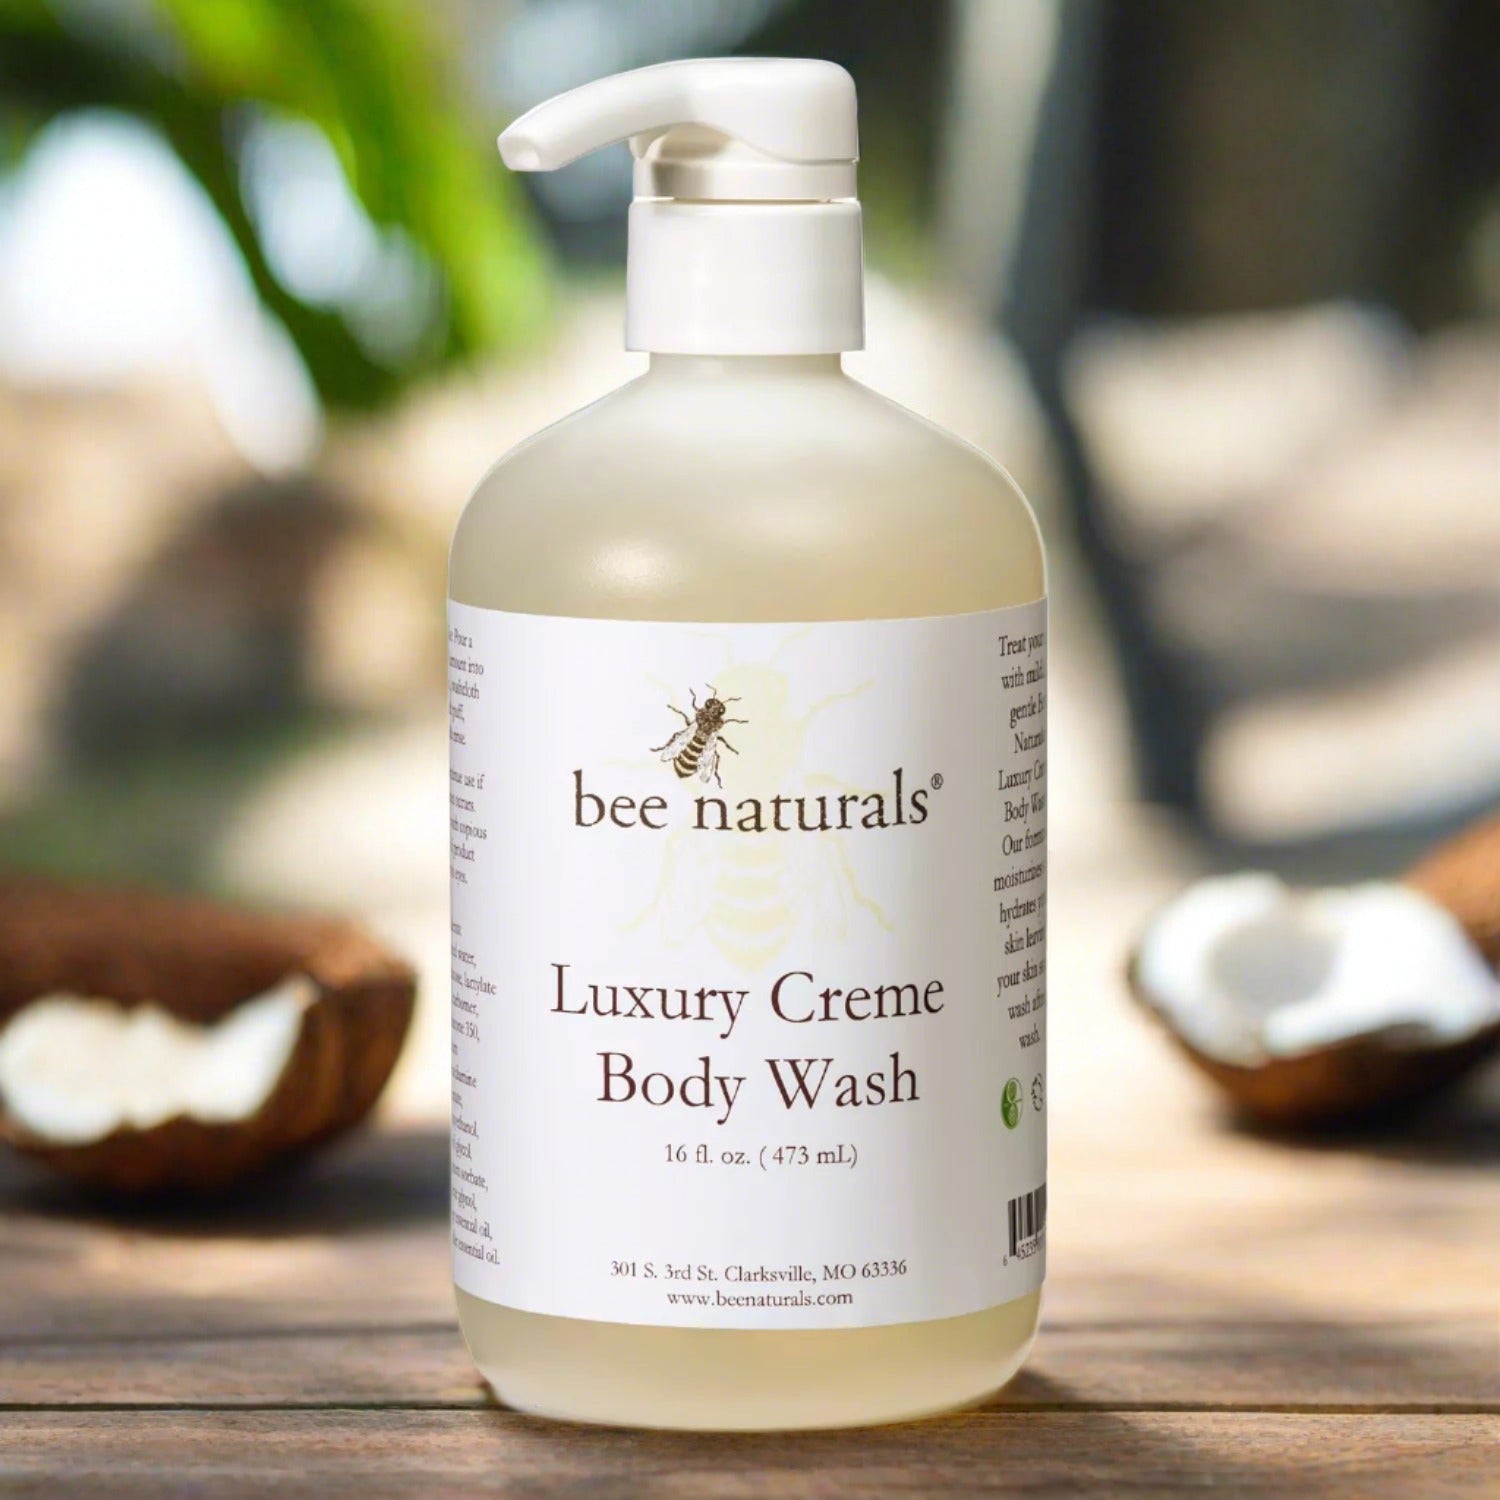 Luxury Creme Body Wash - Bee Naturals